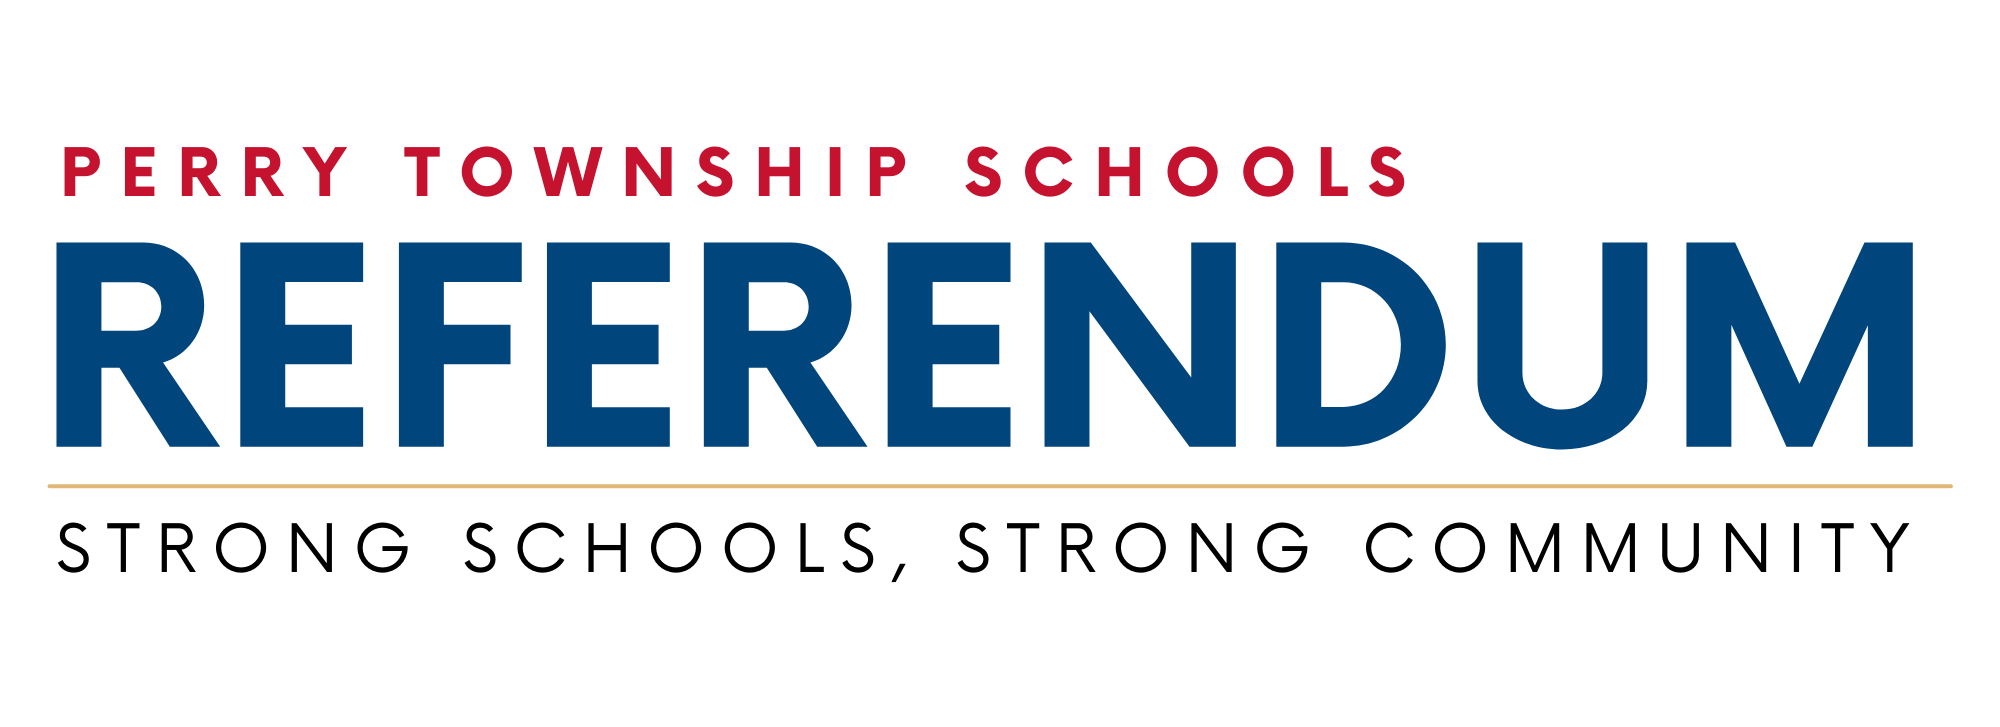 Perry Township Schools Referendum